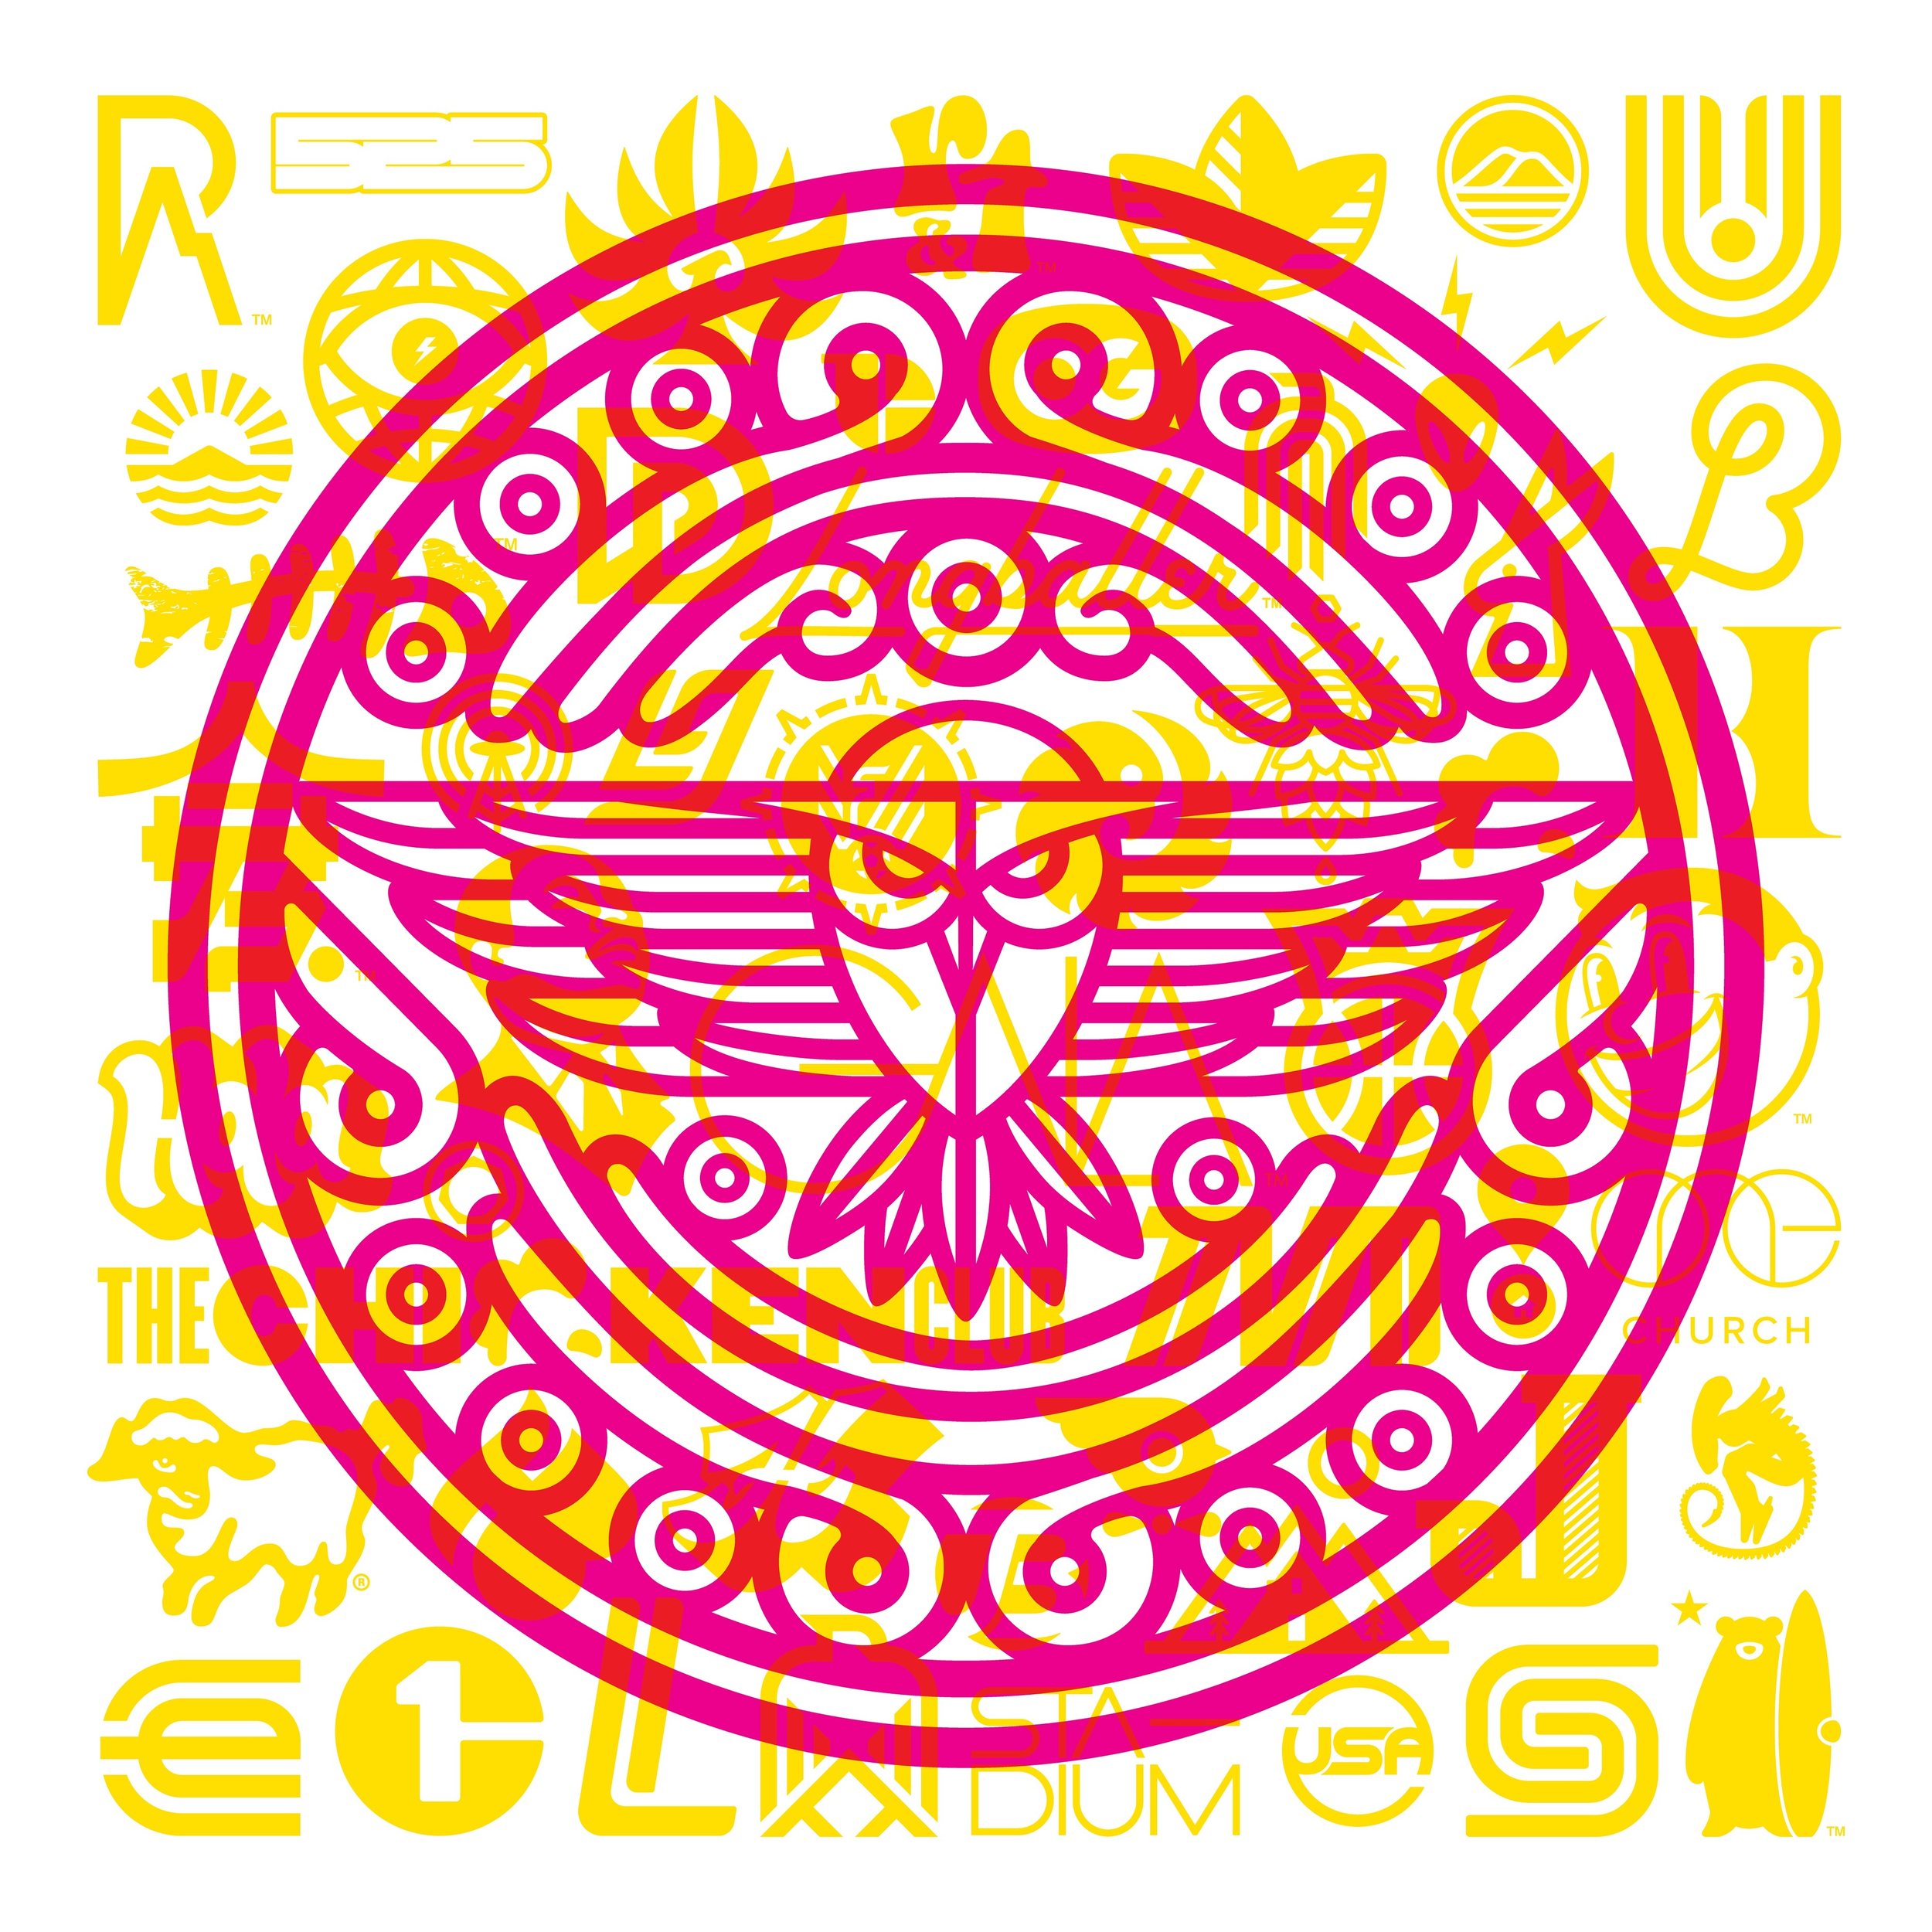 i make logos&hellip; 🦉 
#OGDC #OGDesignCo #Tecolote #Owl #GraphicDesign #Design #Logo #Logos #LogoDesigner #LogoDesigns #Logomark #LogoLounge #LogoInspirations #Icons #Symbols #Art #IdentityDesign #dribbble #Behance #SanDiego